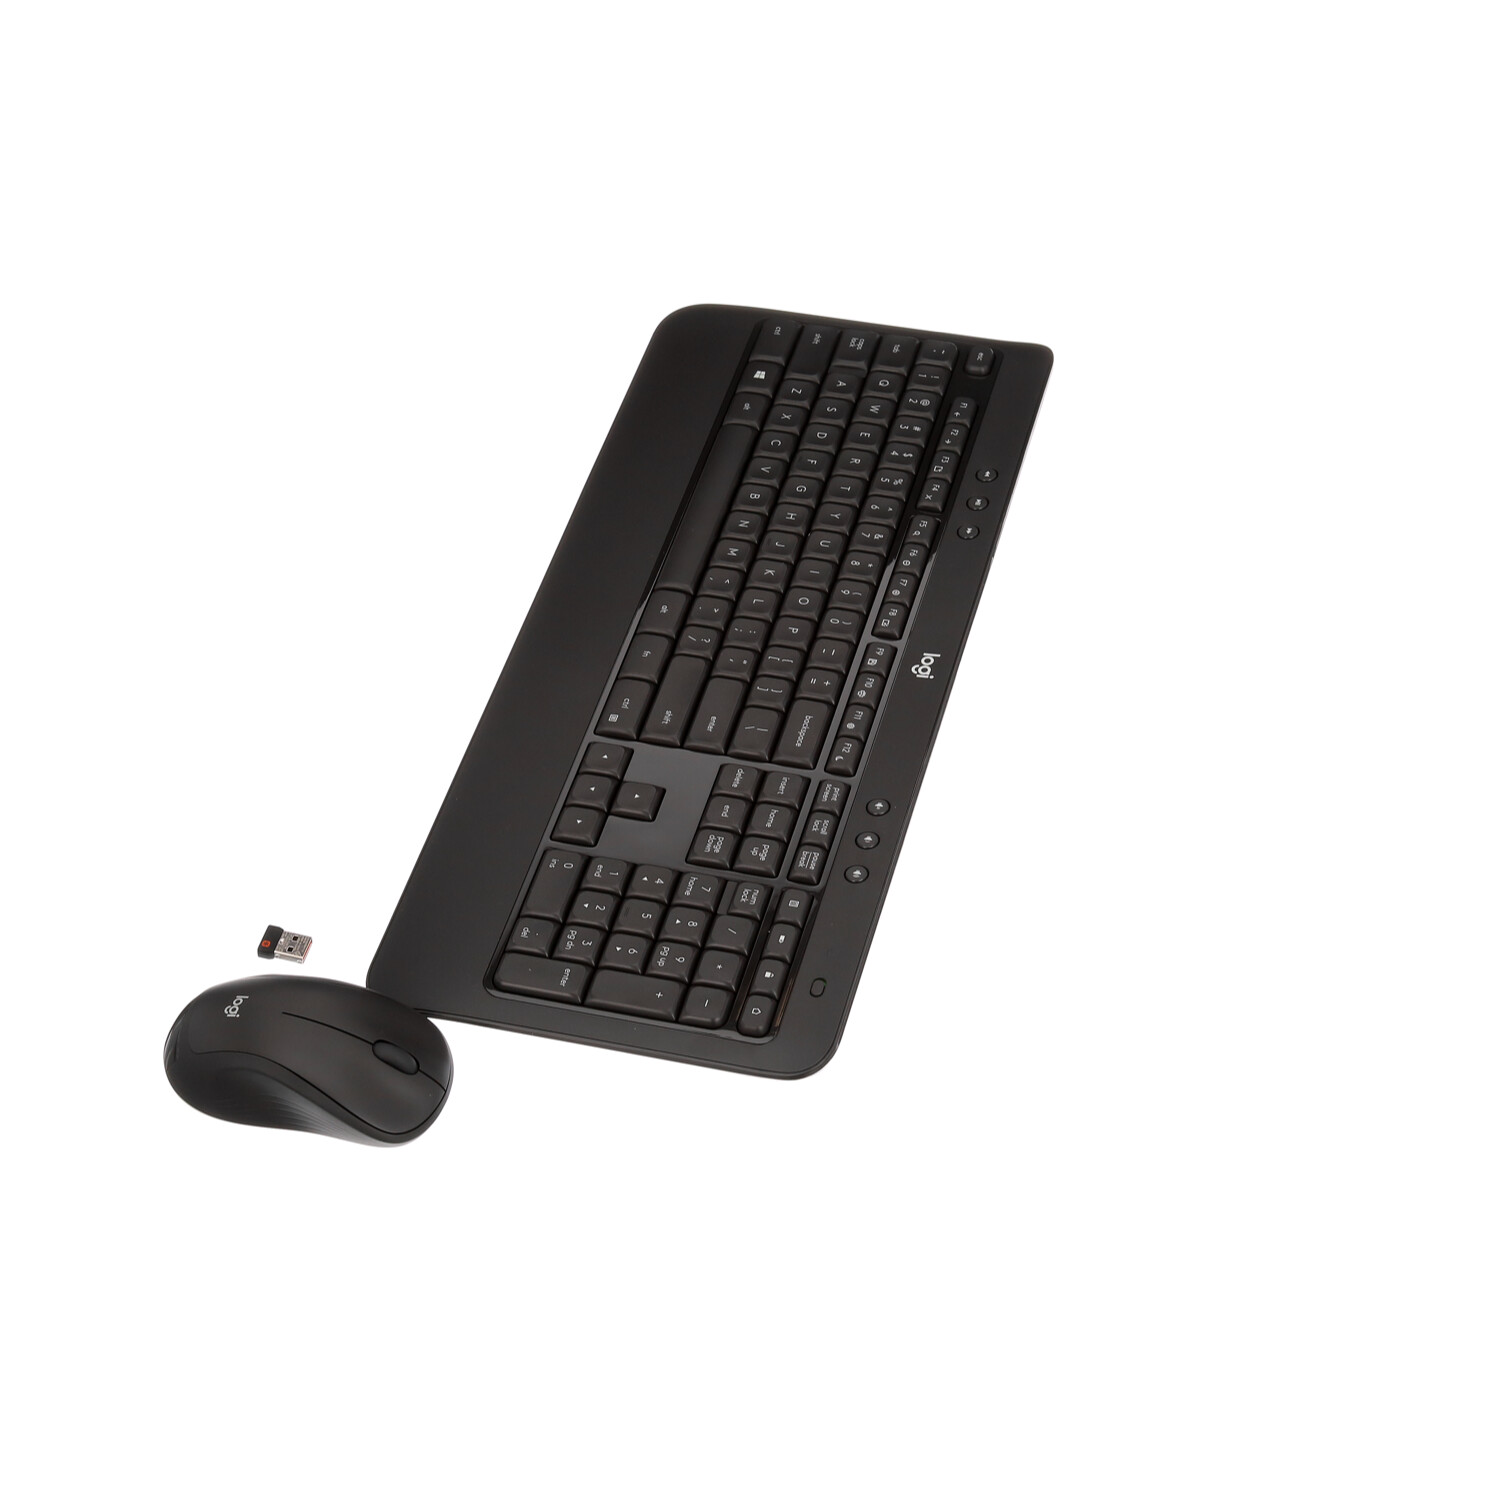 Logitech MK540 Advanced Wireless Keyboard and Mouse - Black